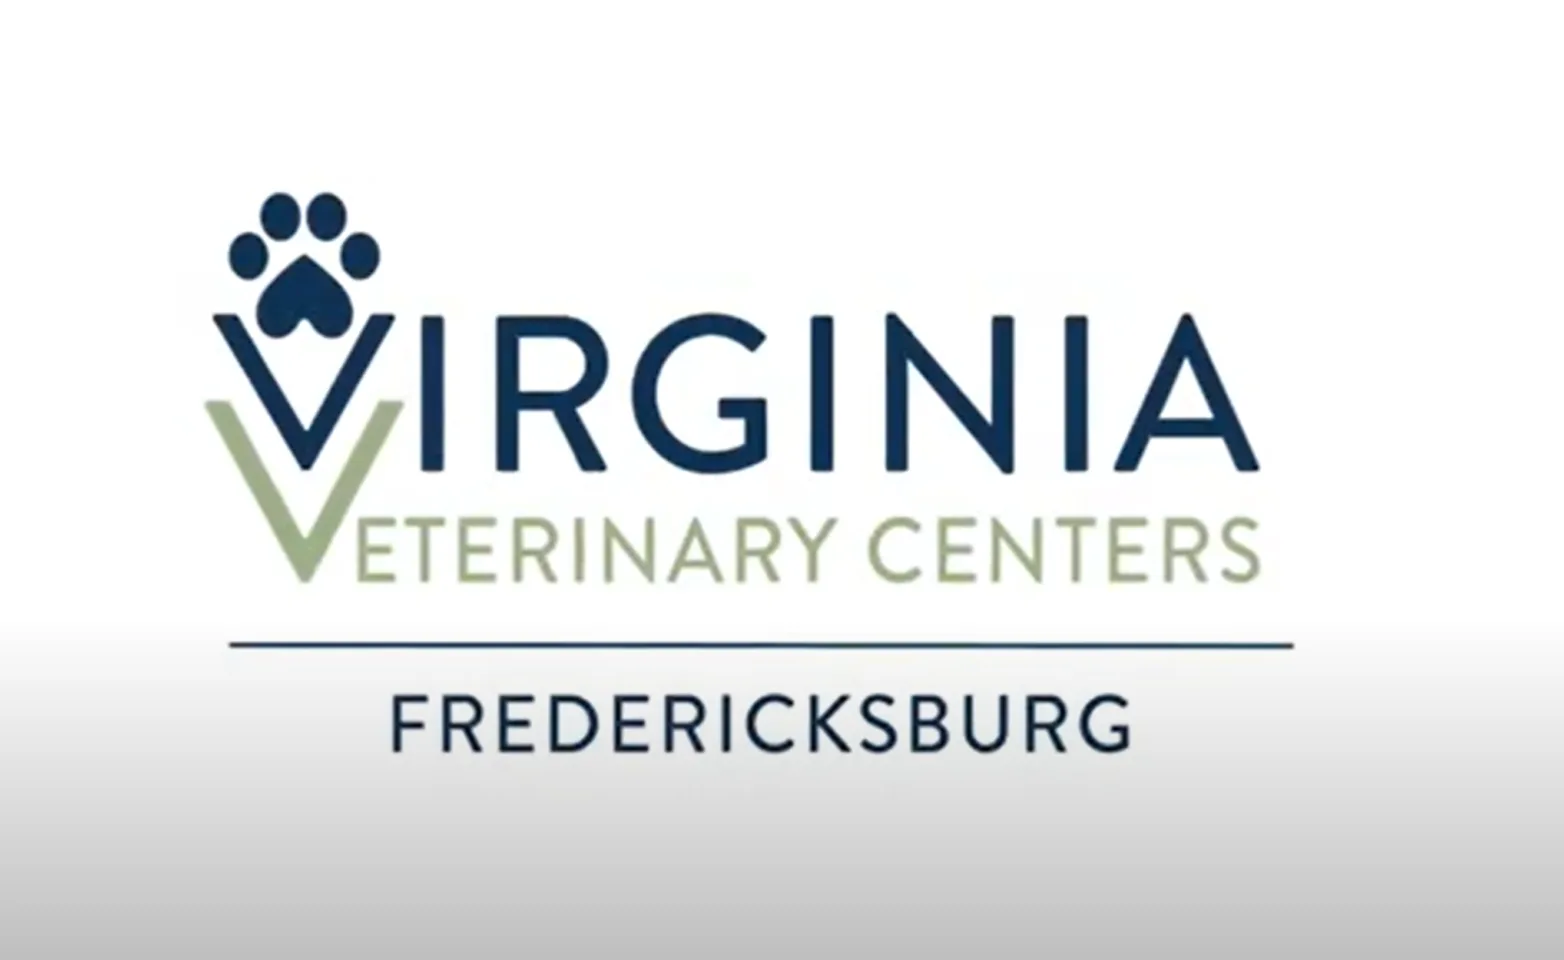 Virginia Veterinary Centers Fredericksburg 